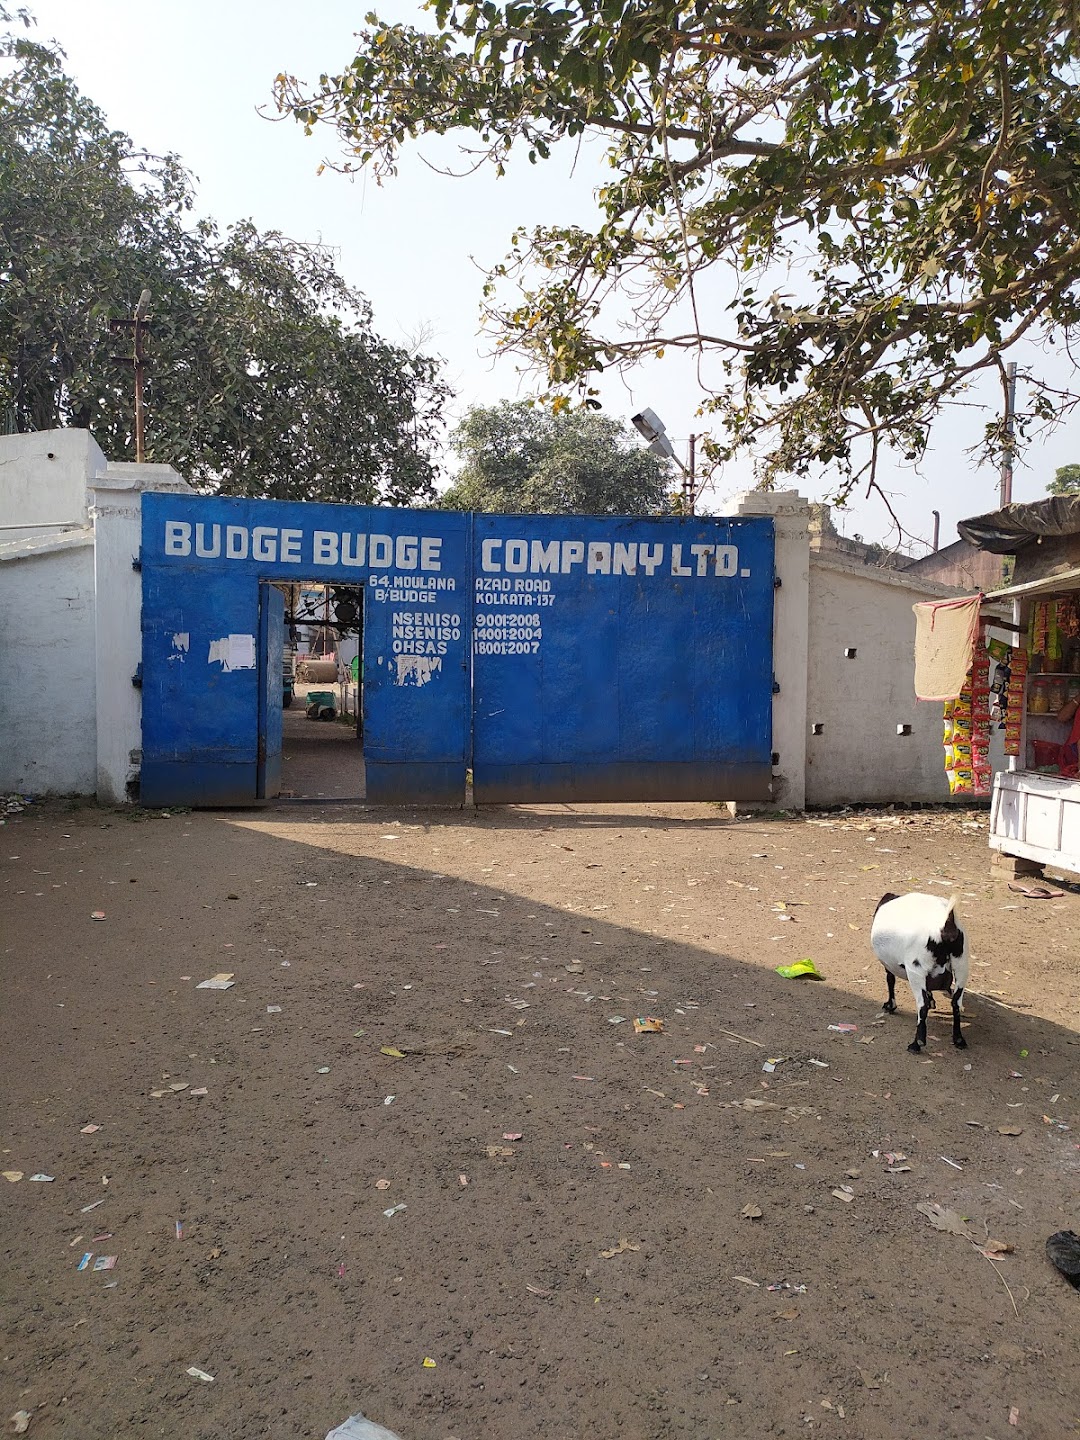 Budge Budge Company Limited